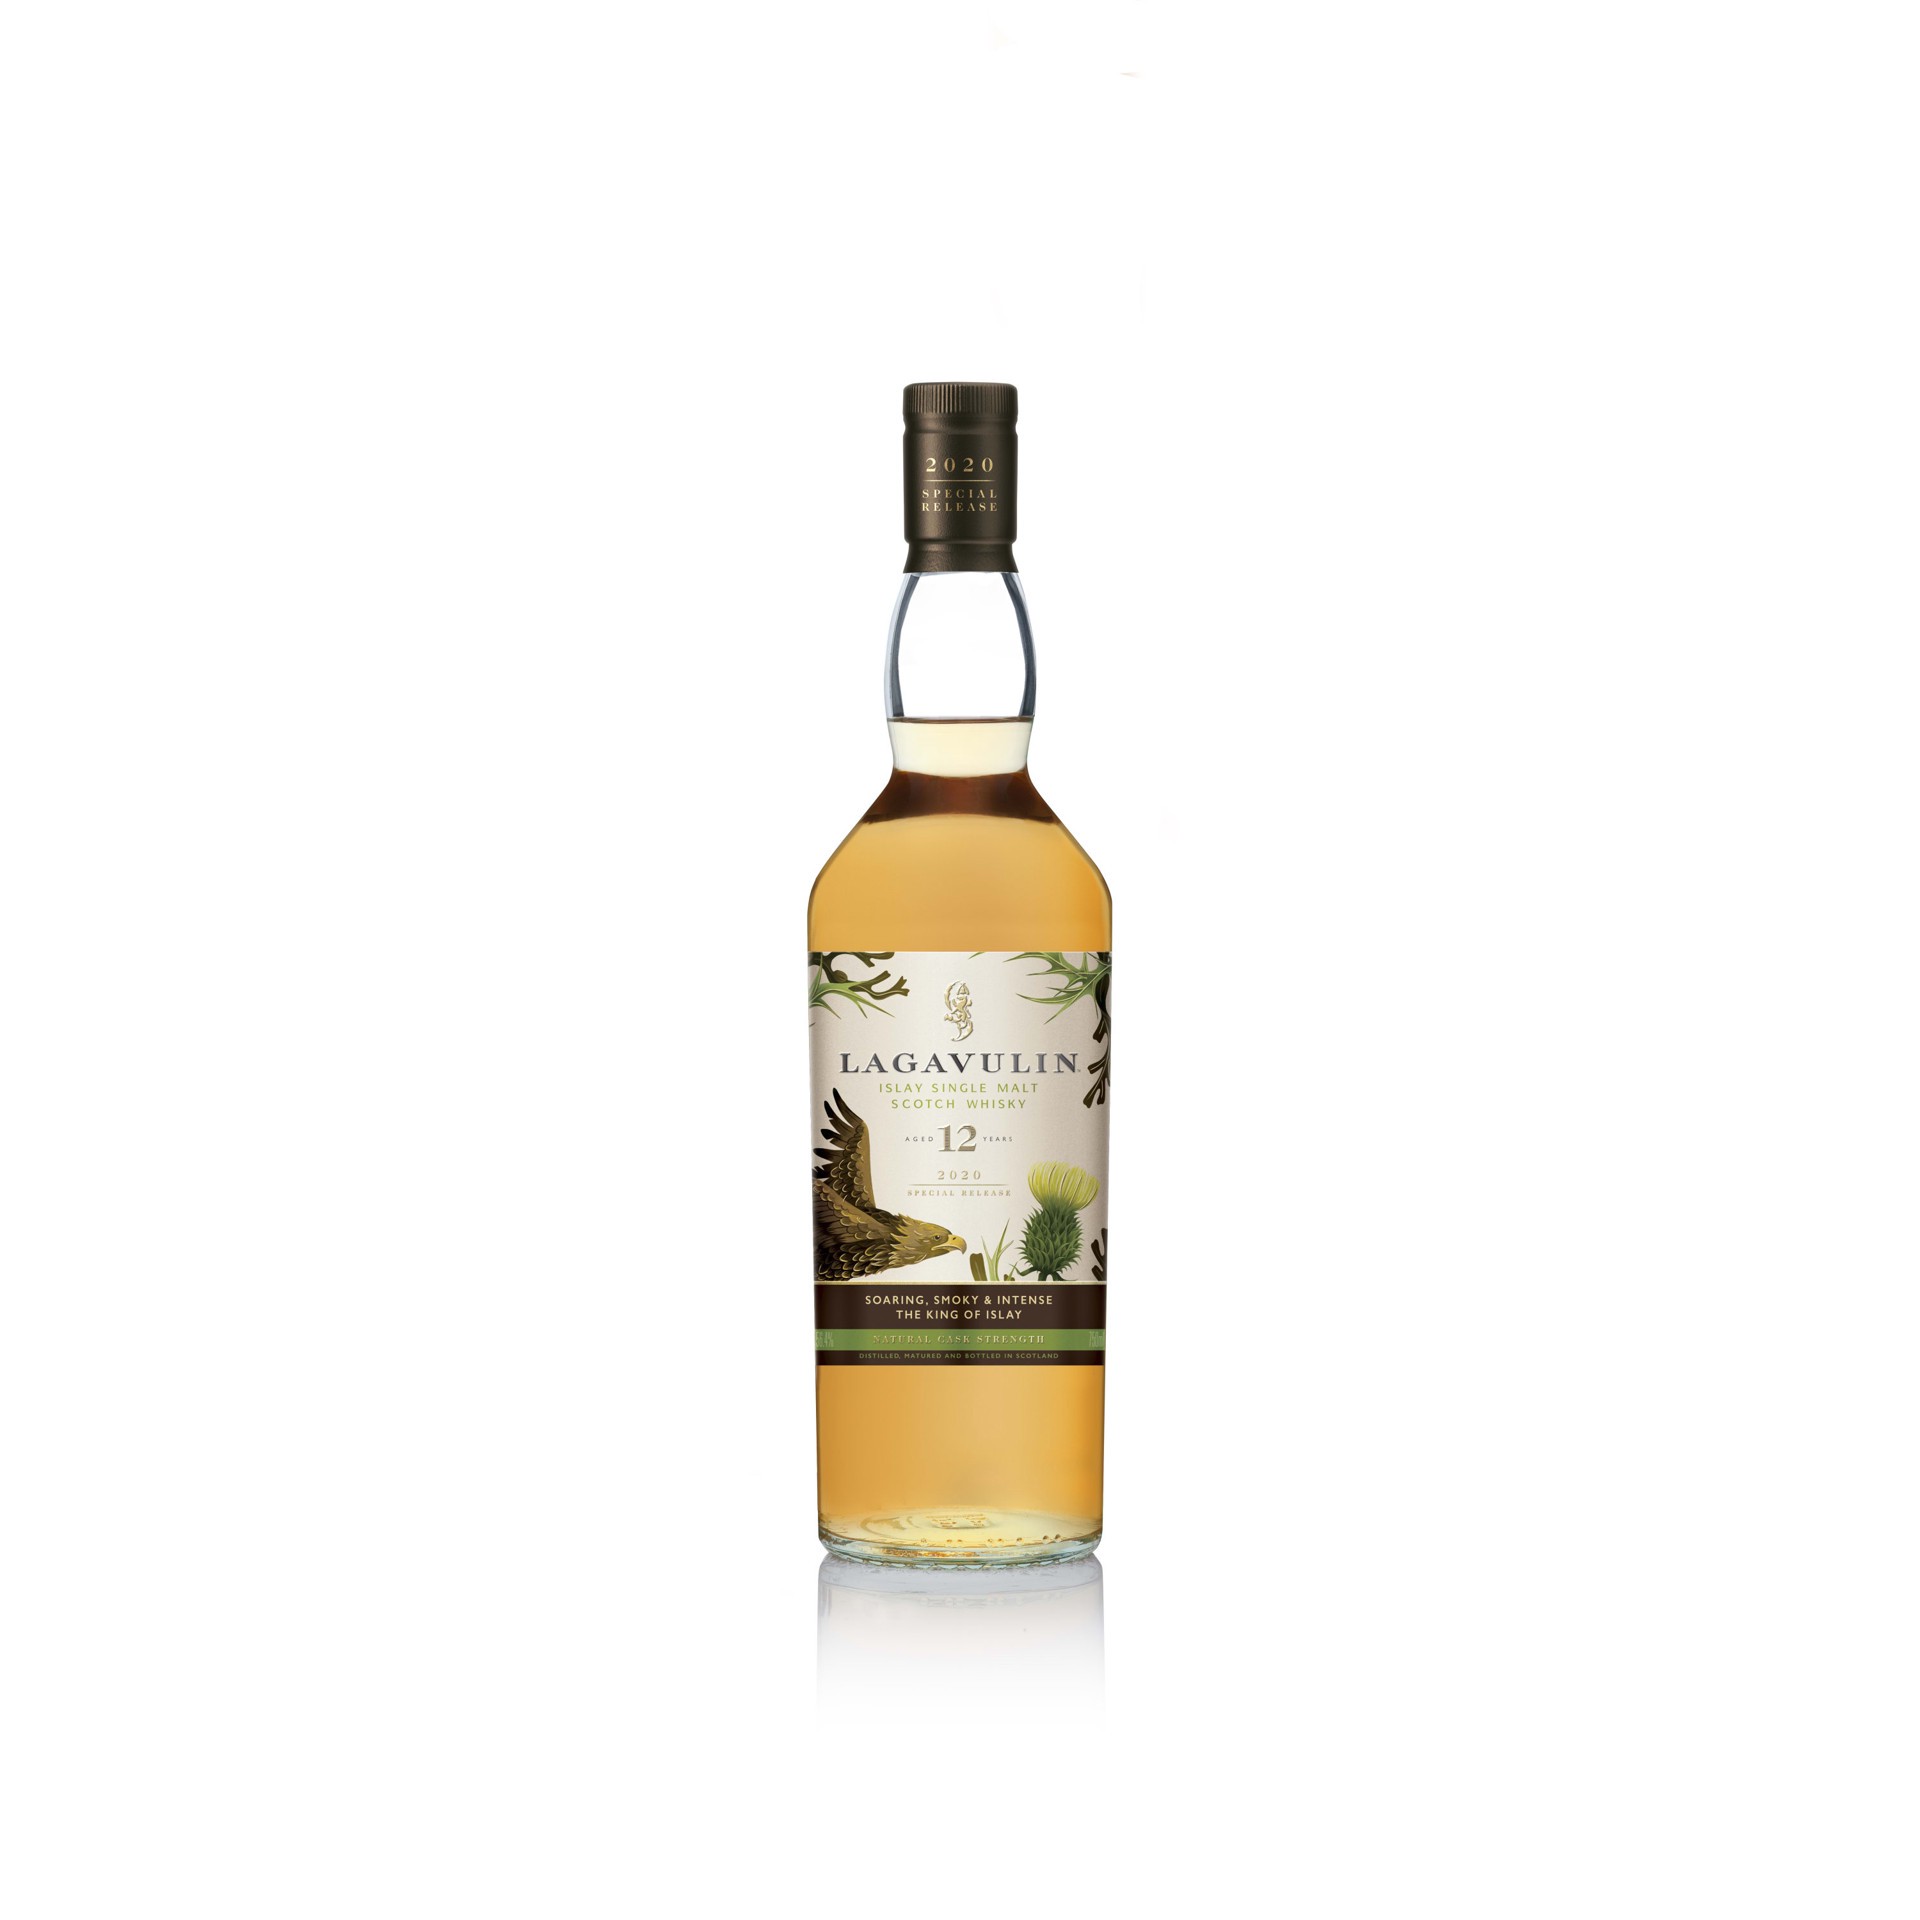 slide 1 of 5, Lagavulin 12 Year Old Islay Single Malt Scotch Whisky, 750 mL, 750 ml